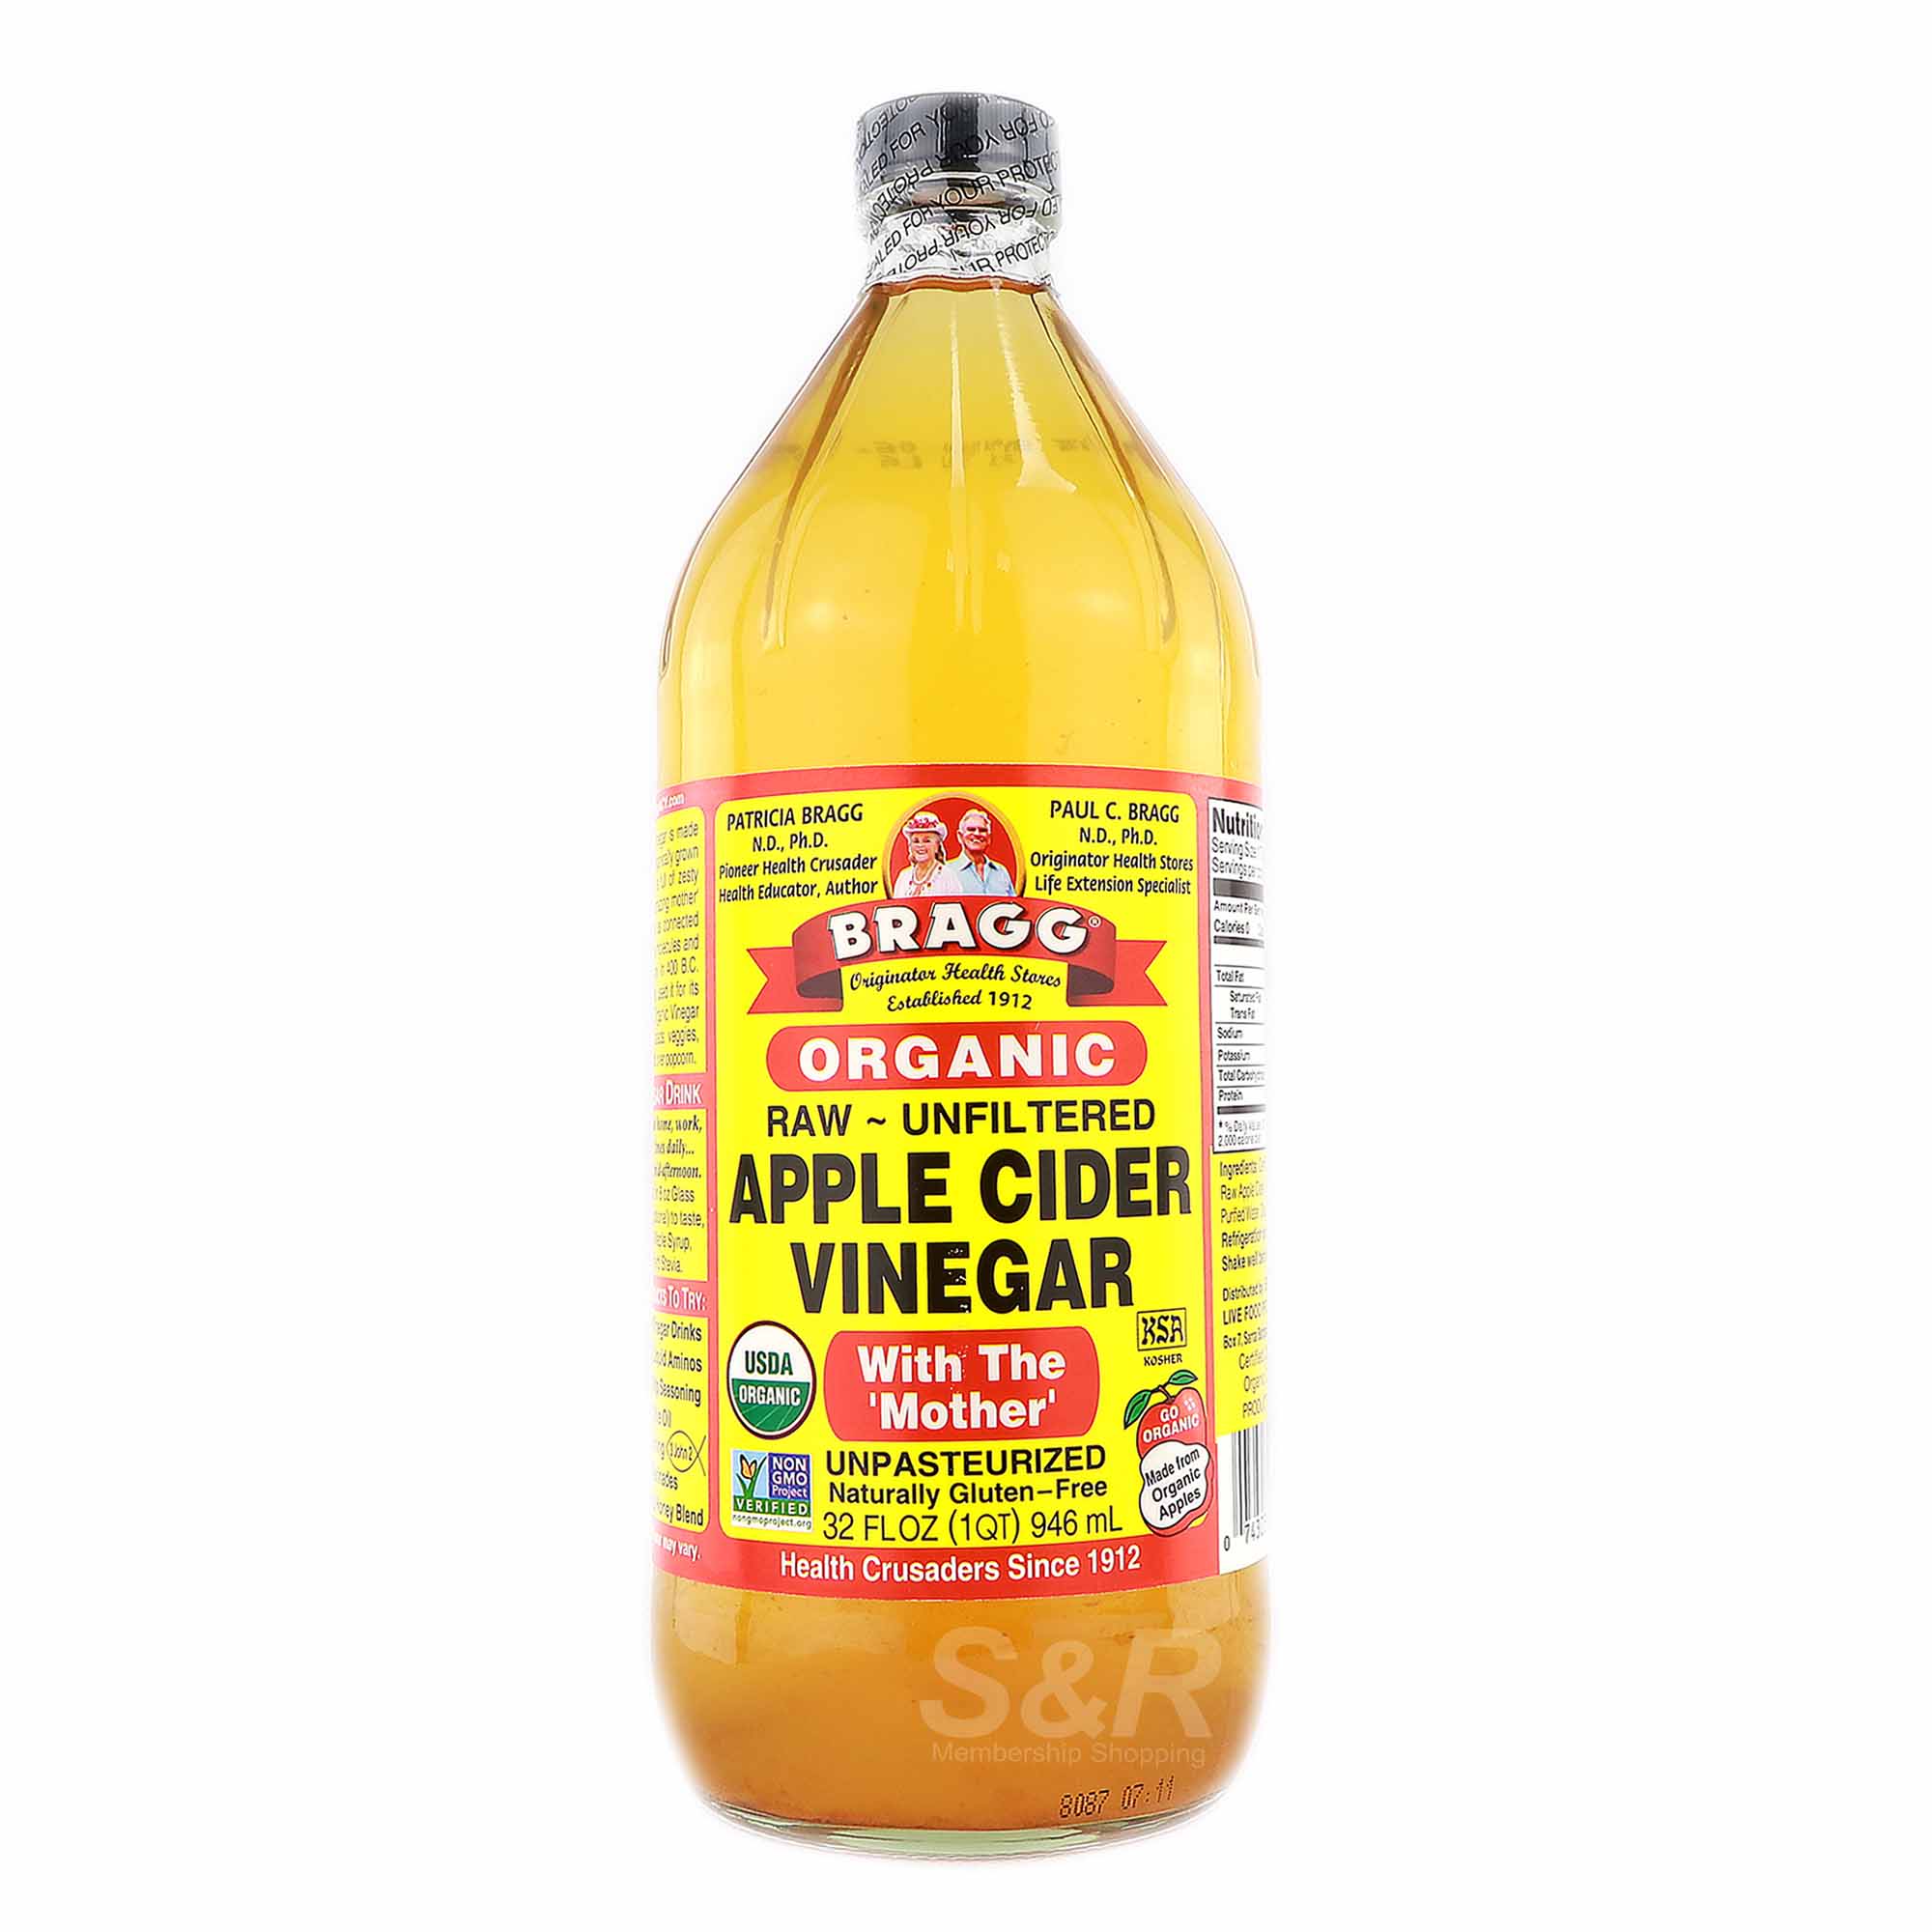 Bragg Organic Raw-Unfiltered Apple Cider Vinegar 946mL